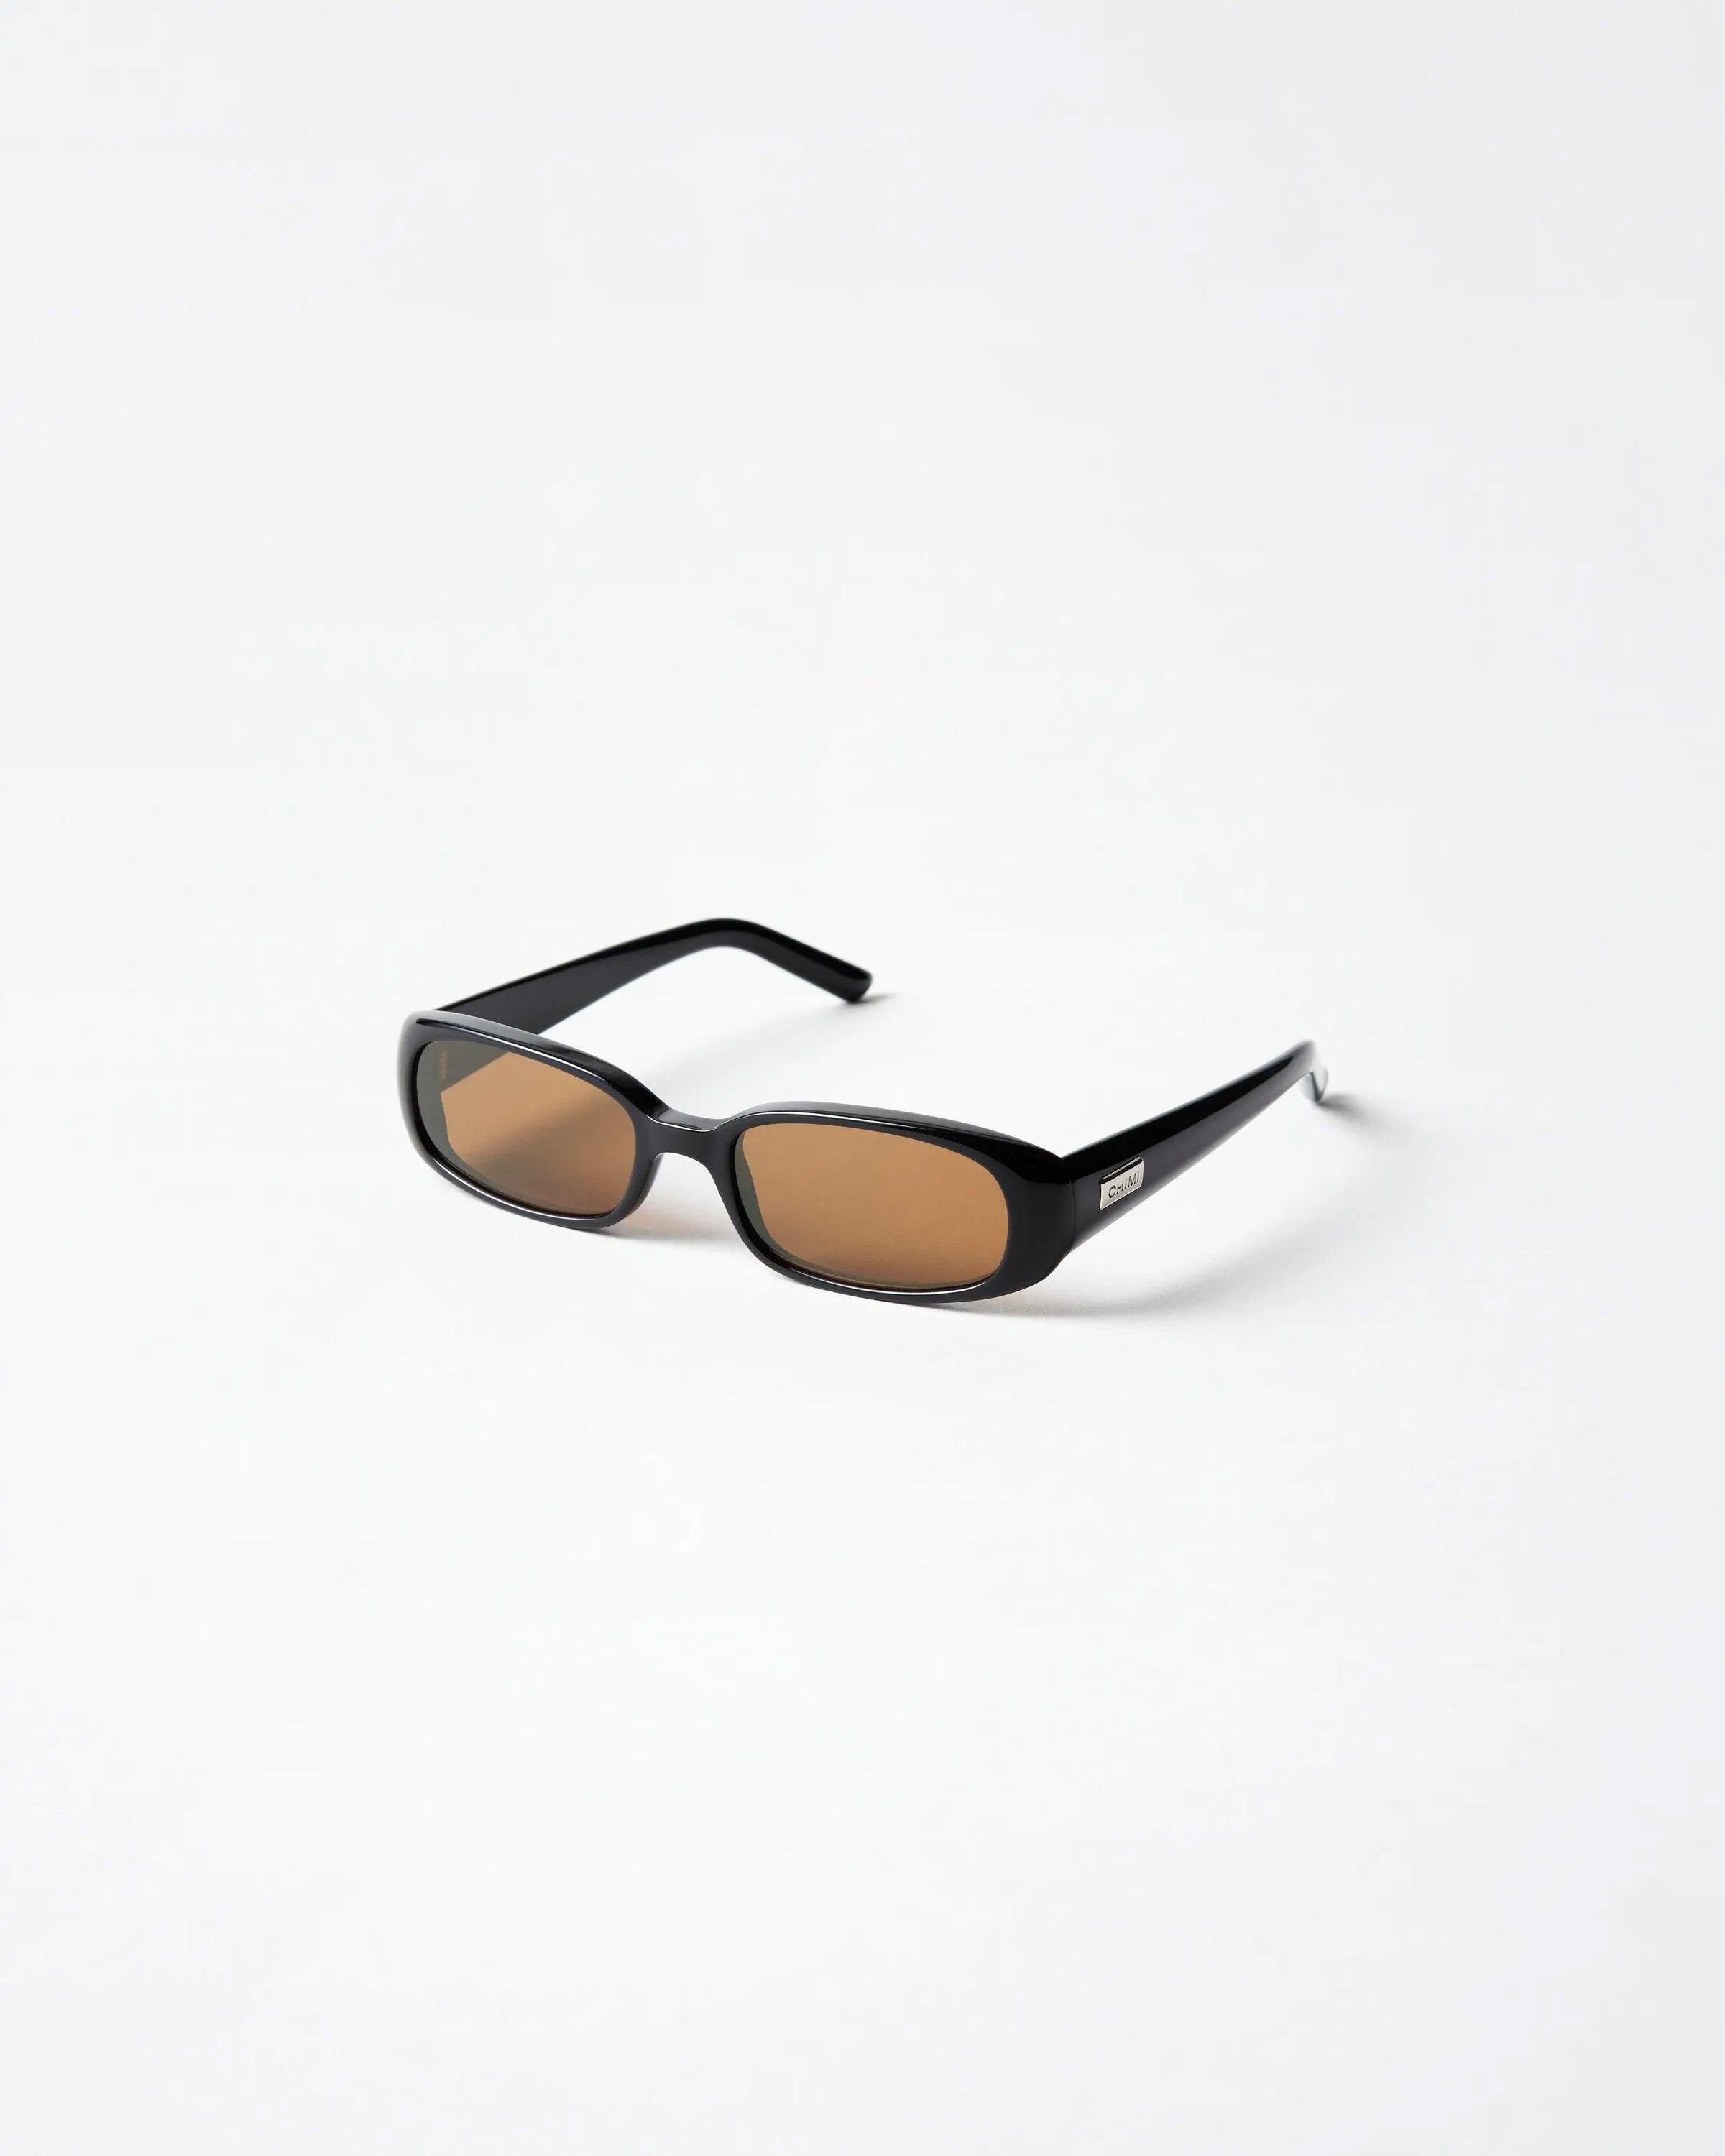 CHIMI LHR - Black - One size - Sunglasses